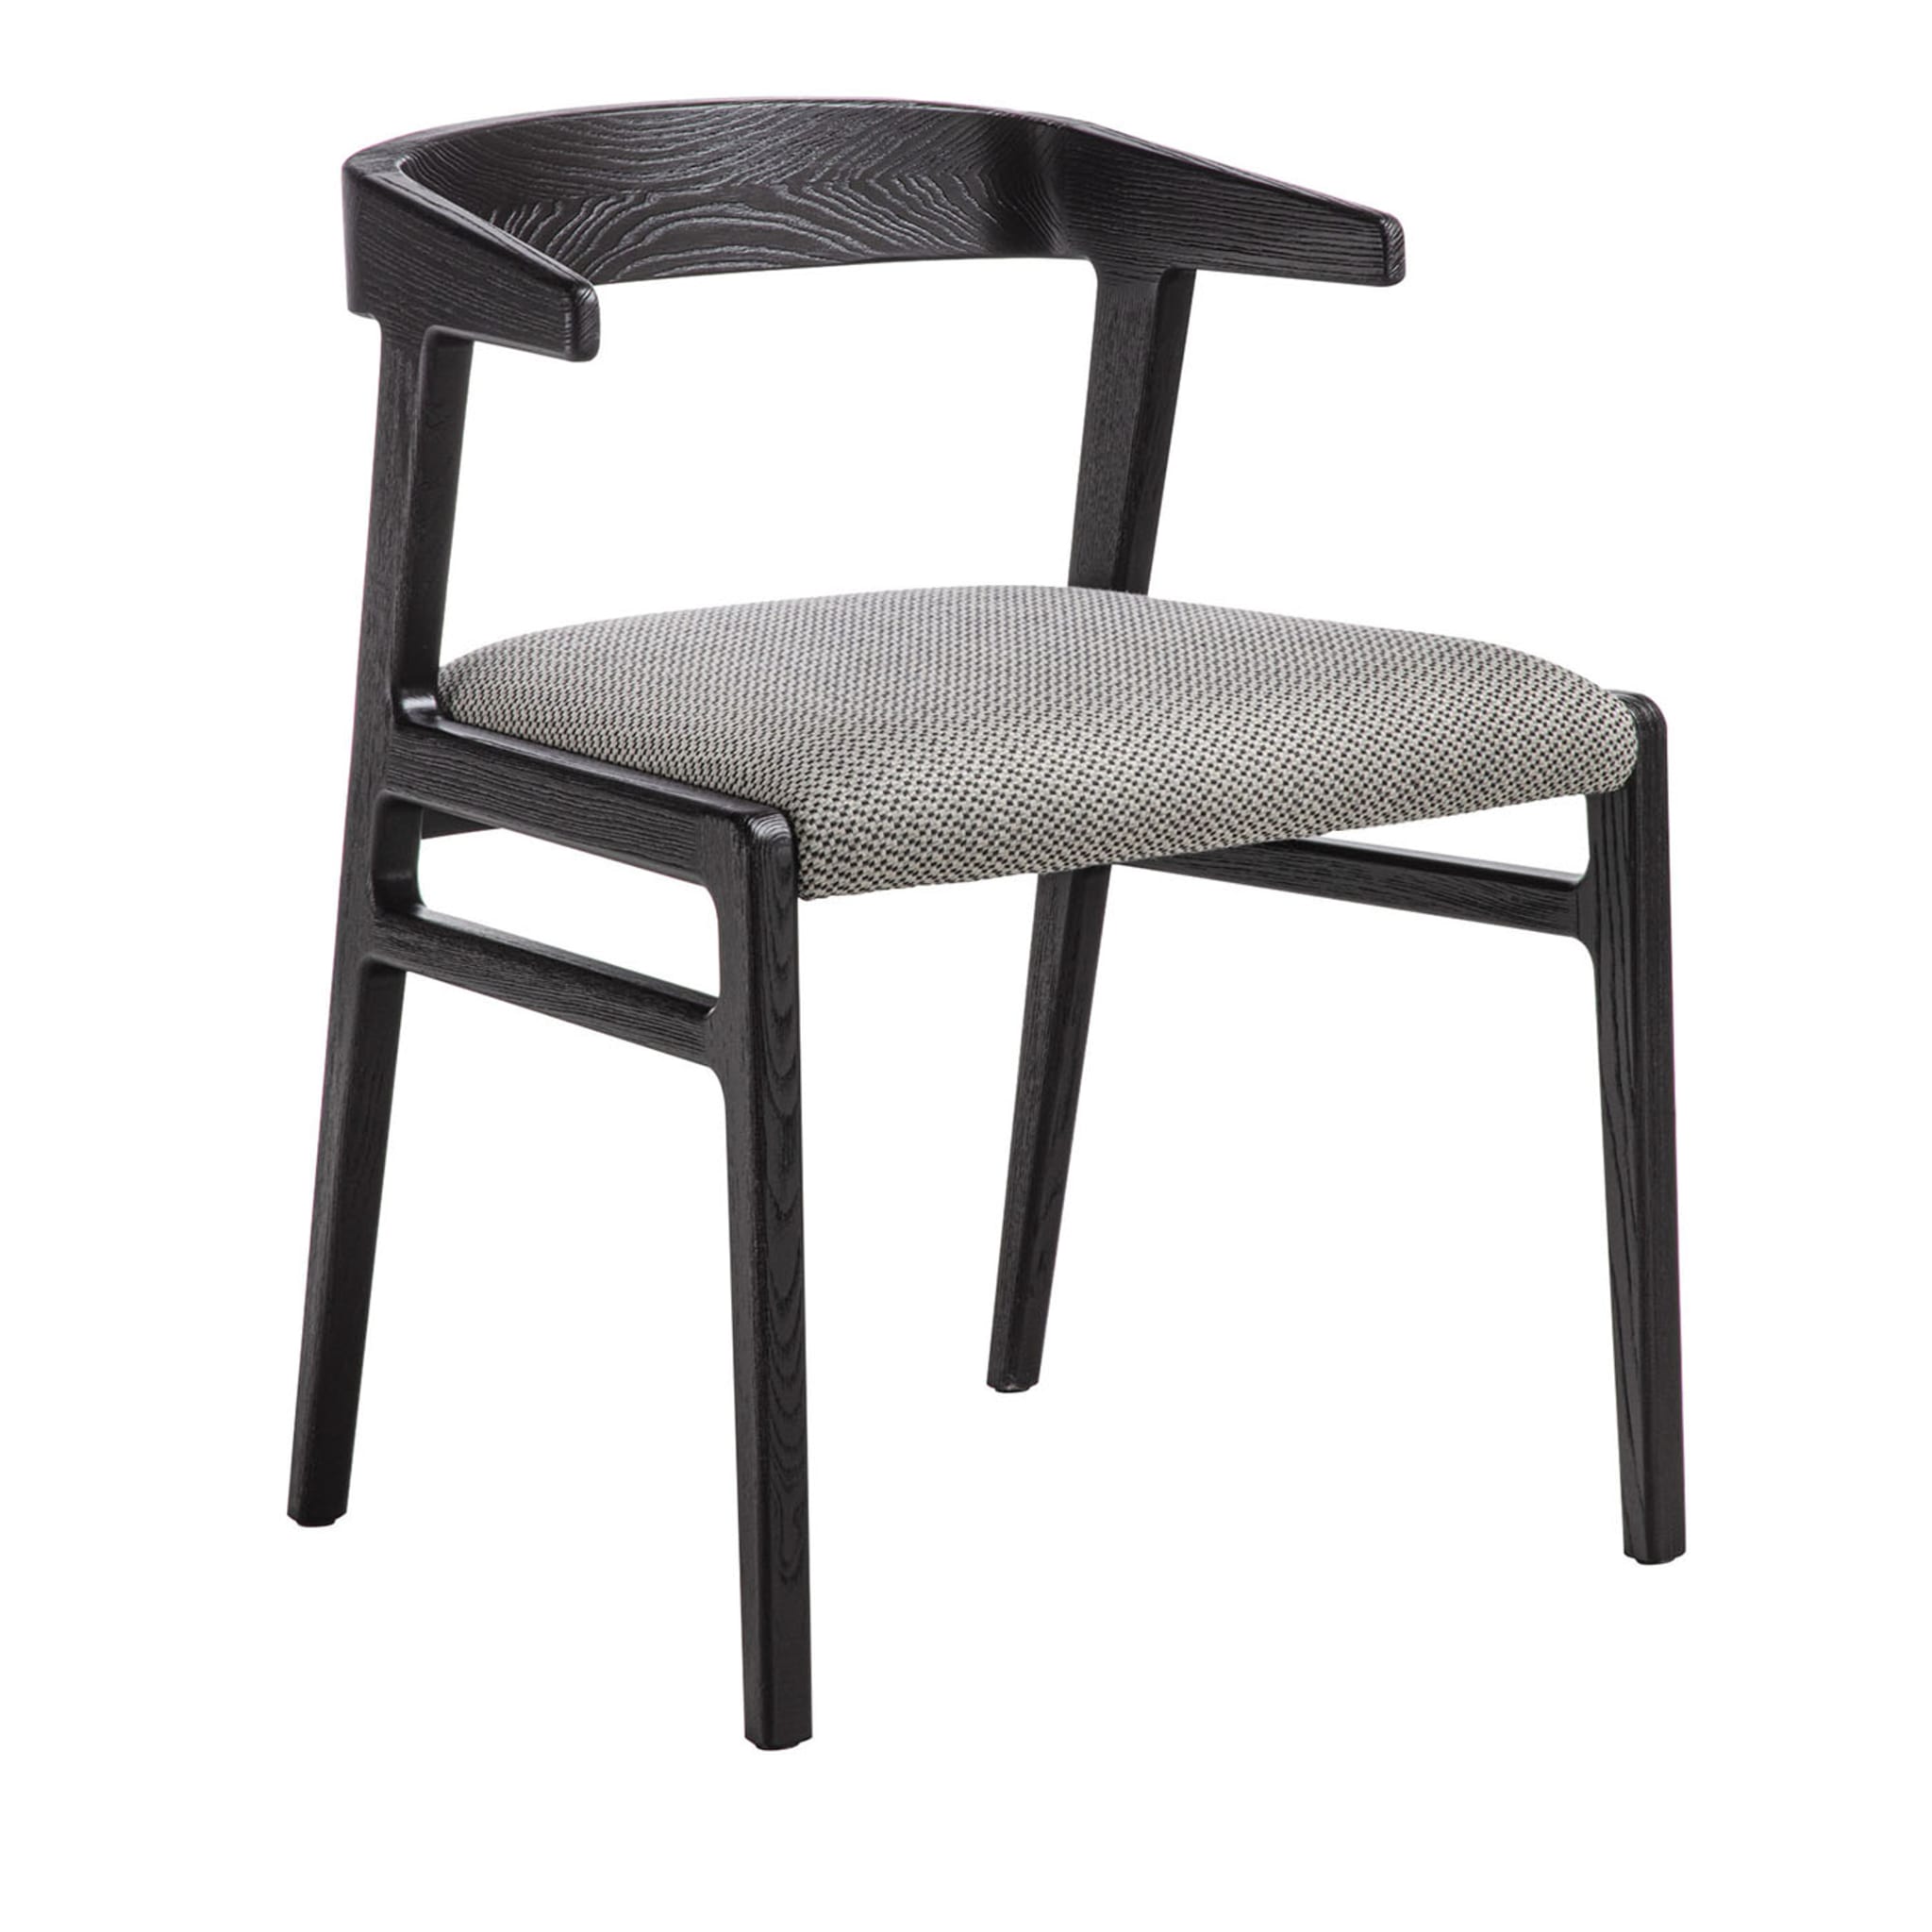 Aida Black Chair with Arms - Main view